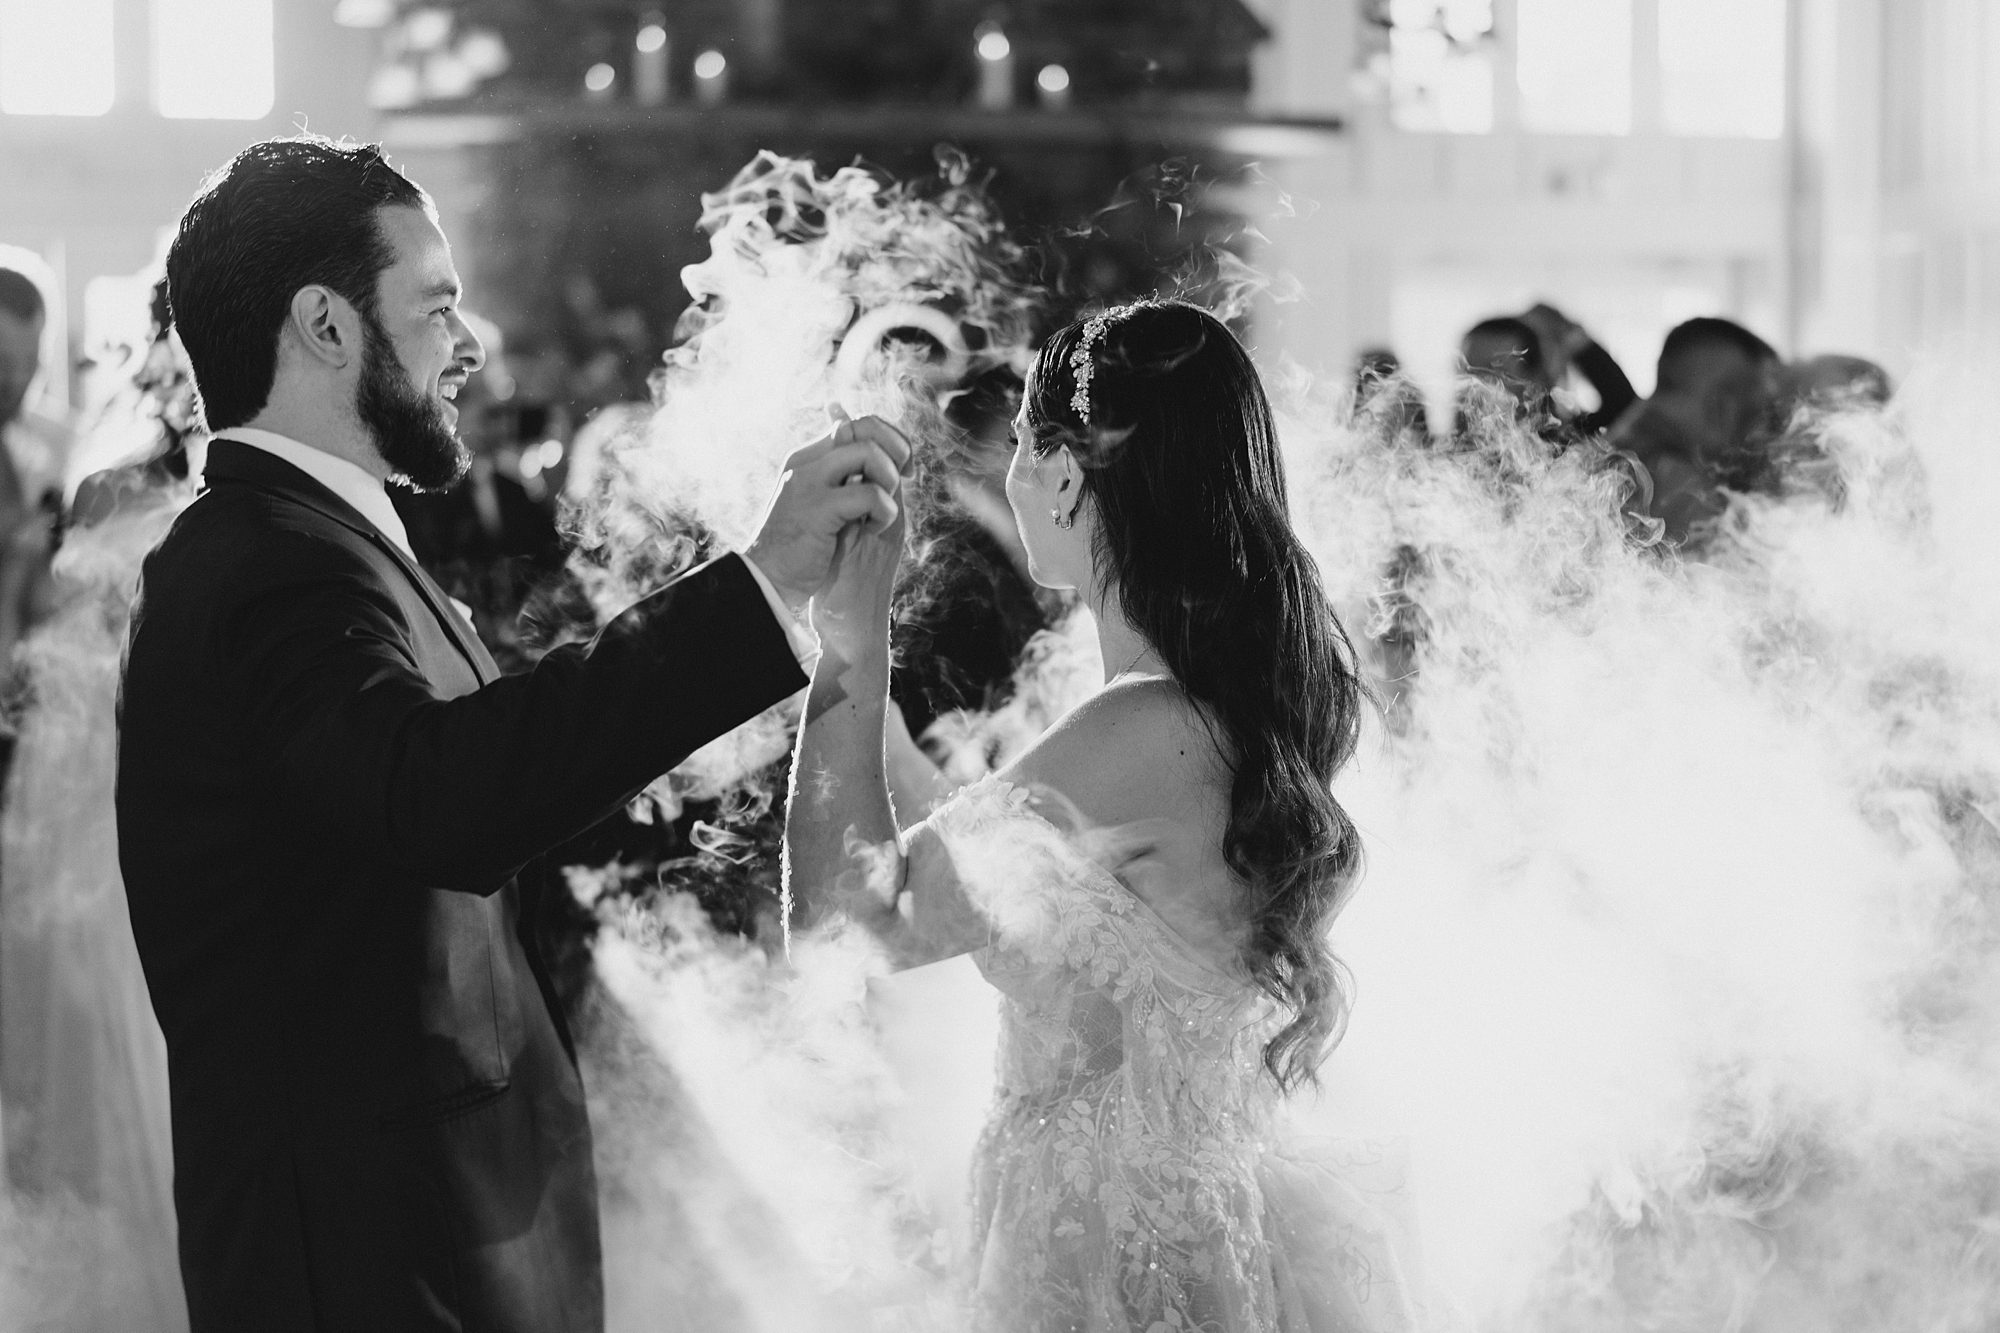 fog machine during wedding reception on the dance floor